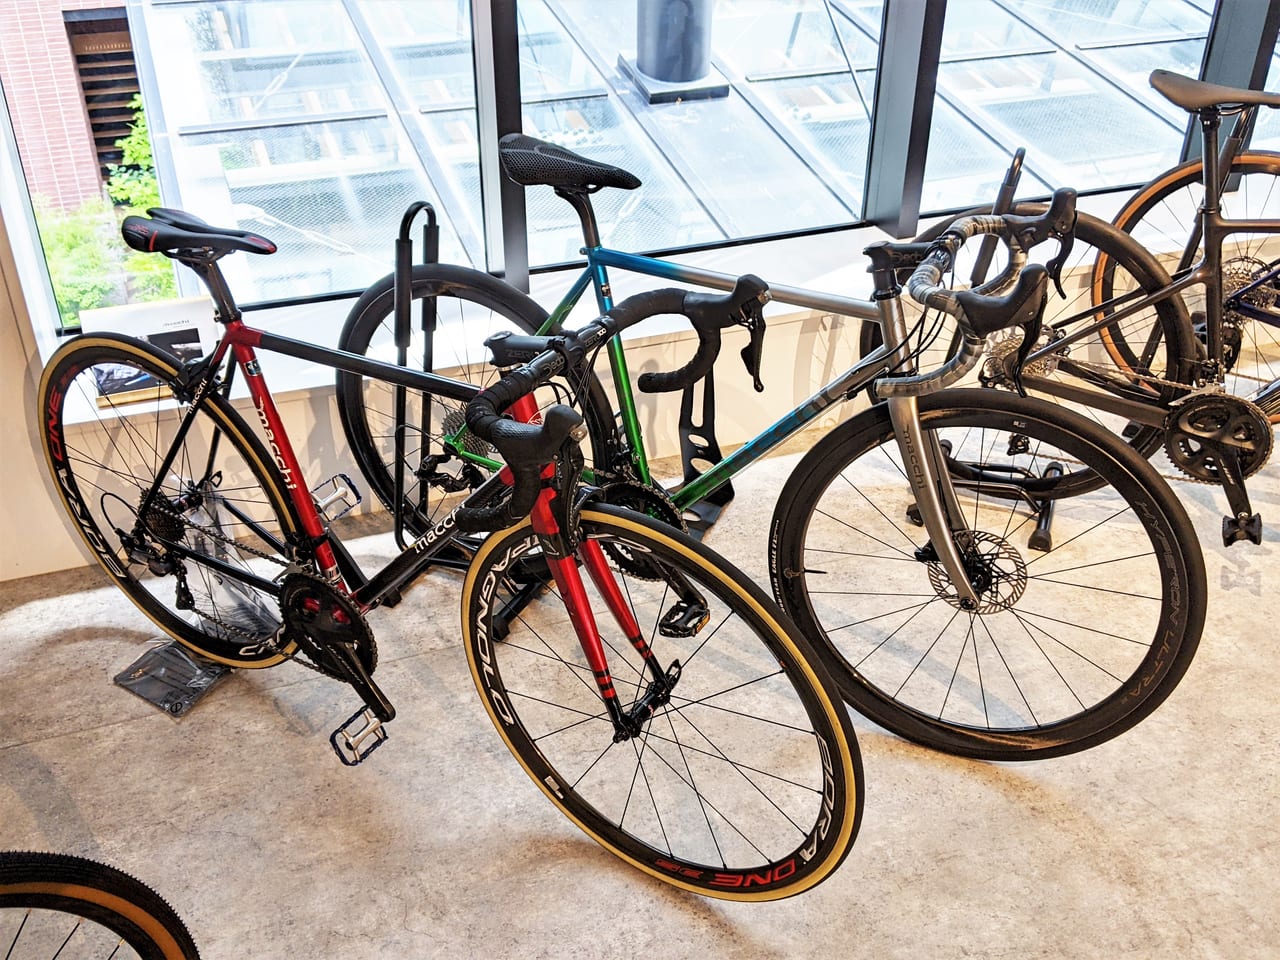 cycleZ 杜の街店 期間限定オープン